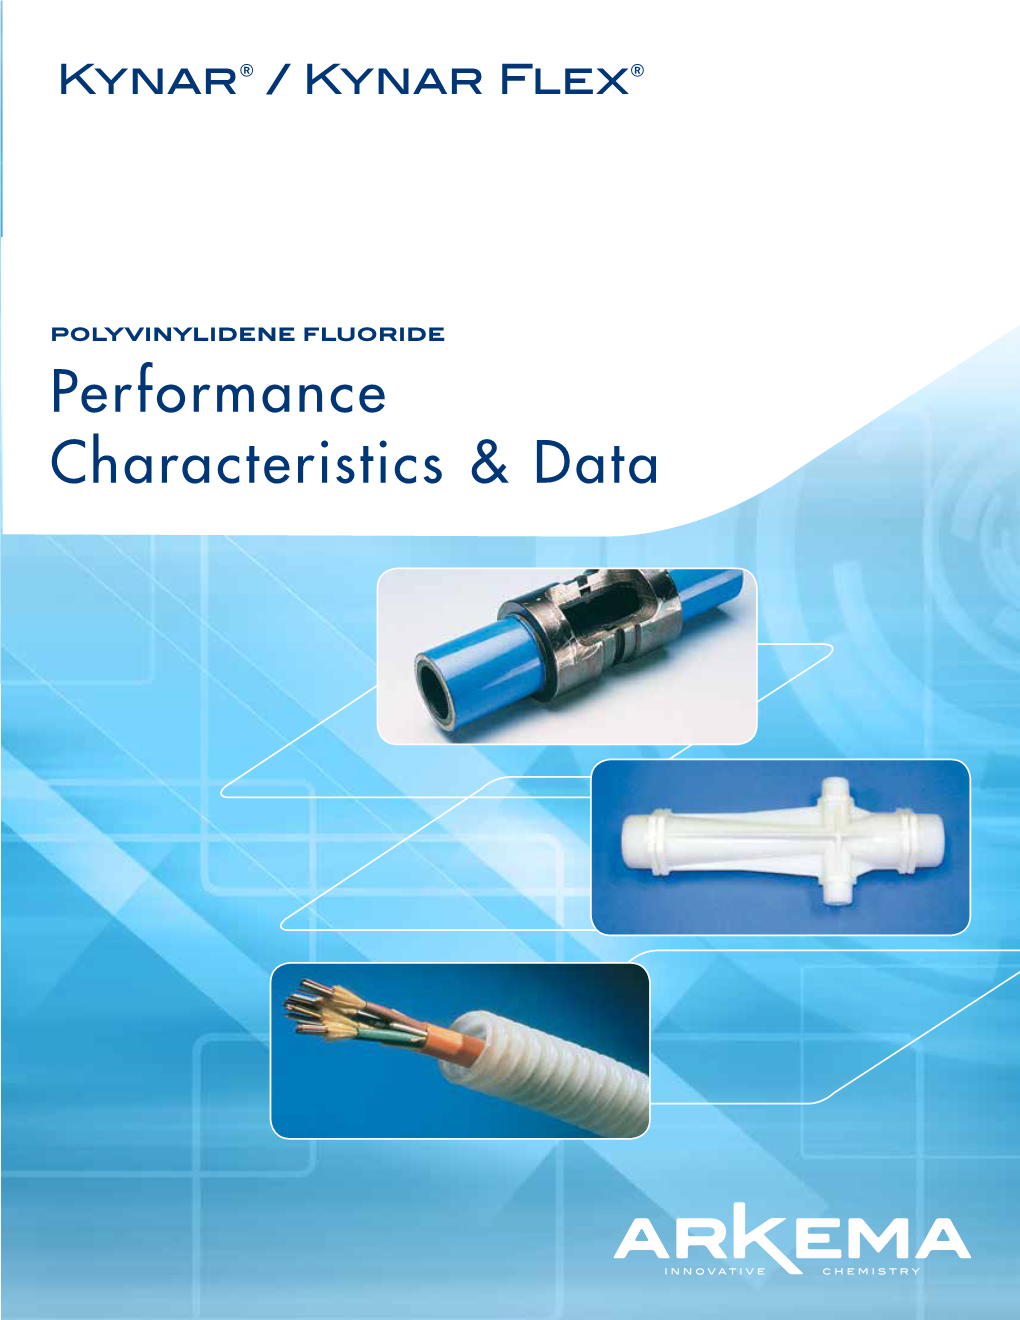 Kynar® PVDF Performance Characteristics Brochure